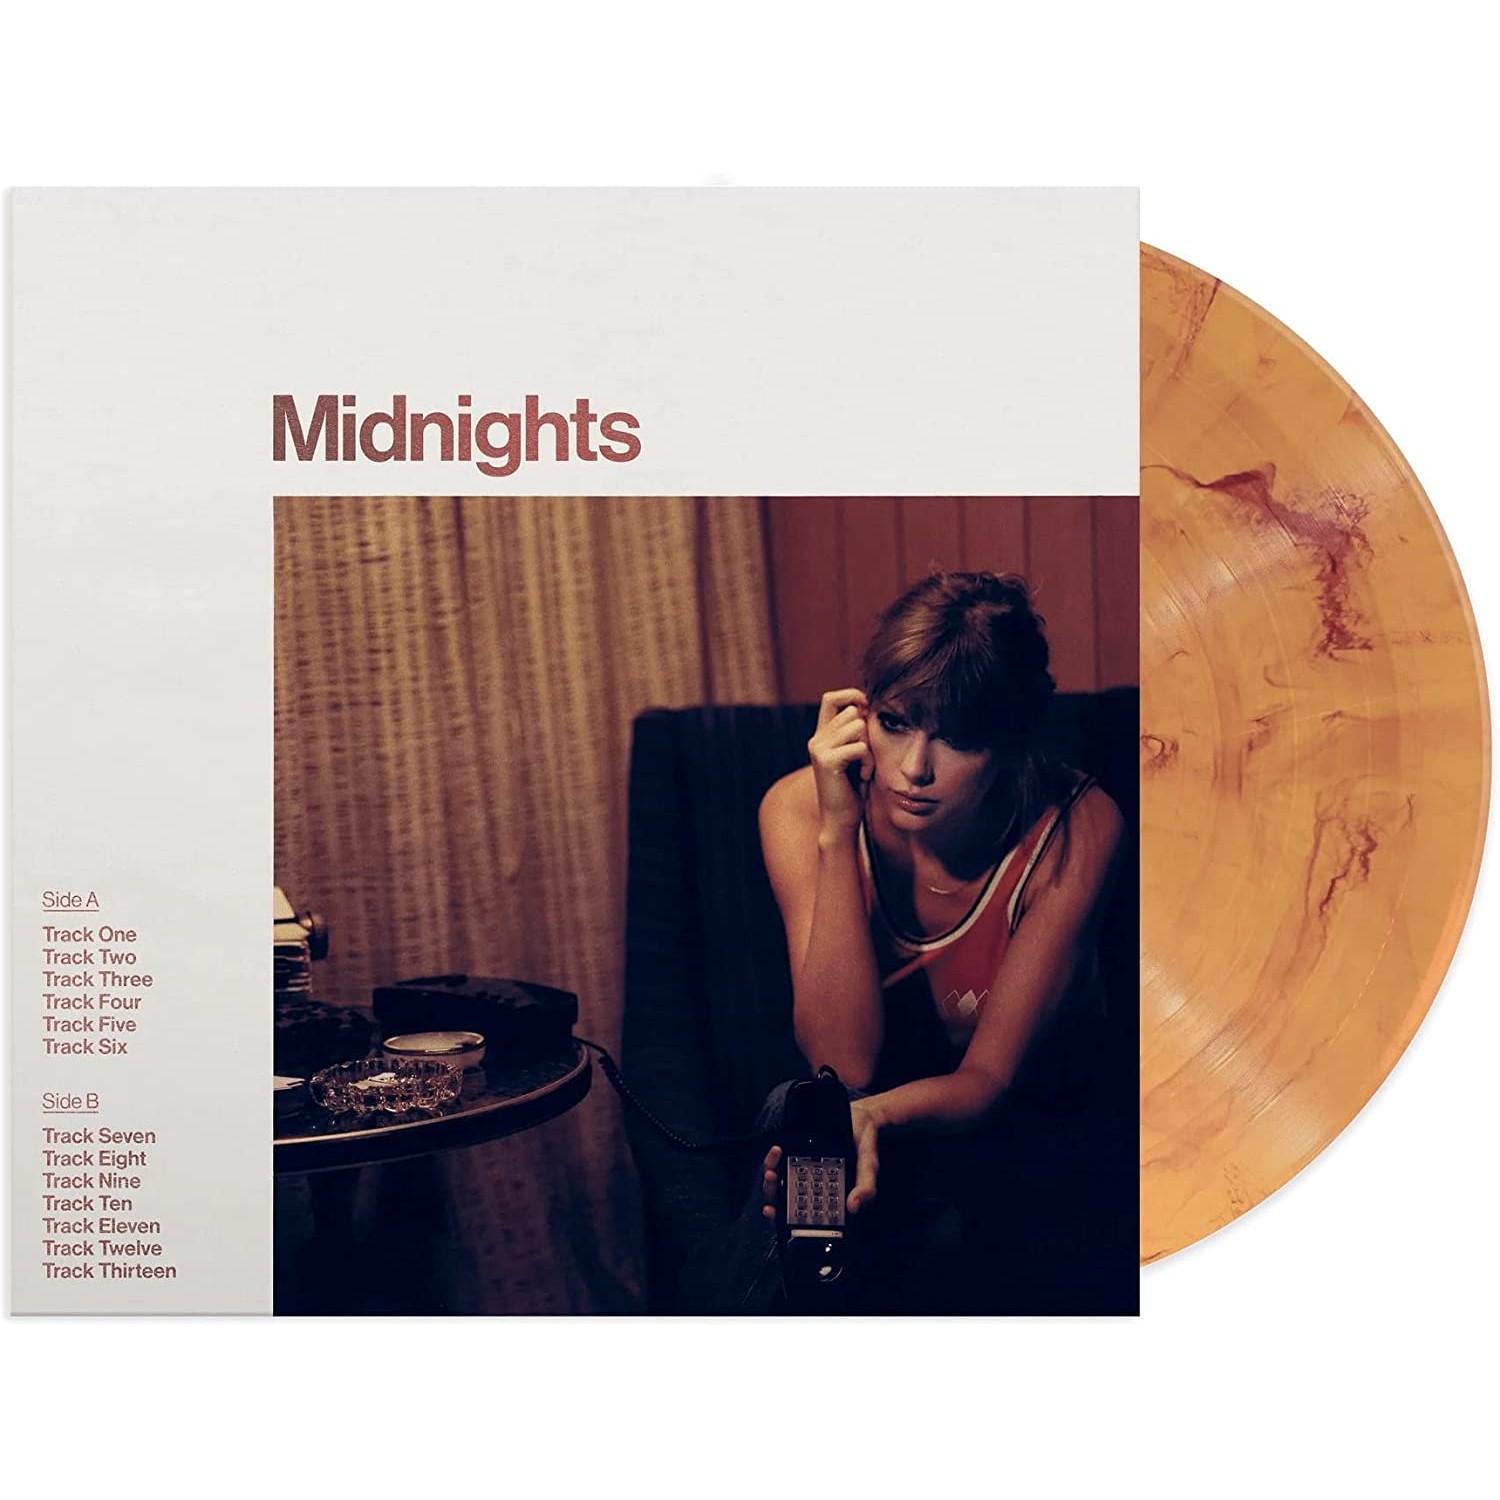 Taylor Swift - Midnights (Blood Moon edition vinyl)